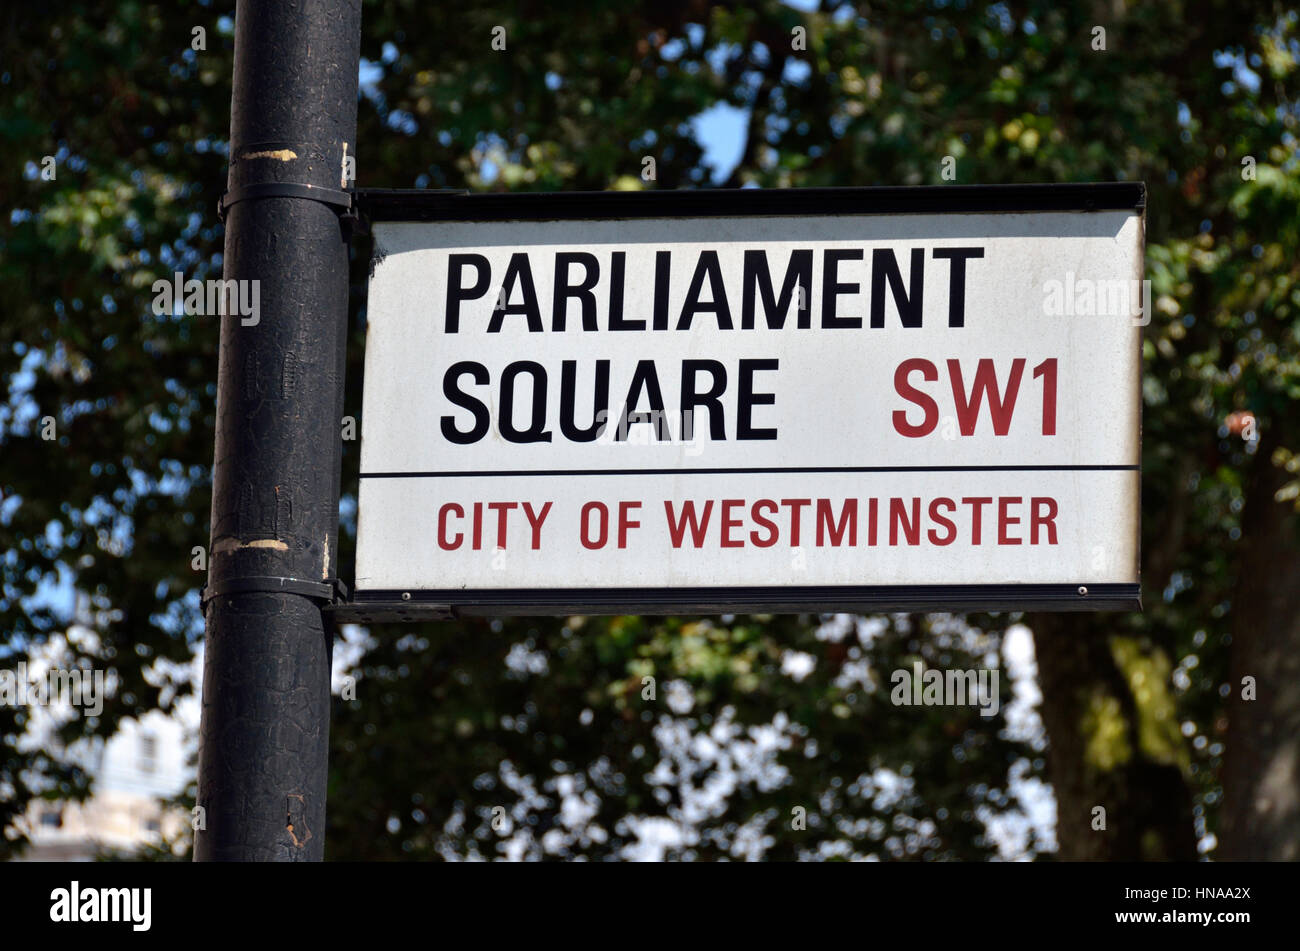 Parliament Square SW1 Straßenschild, London, UK. Stockfoto